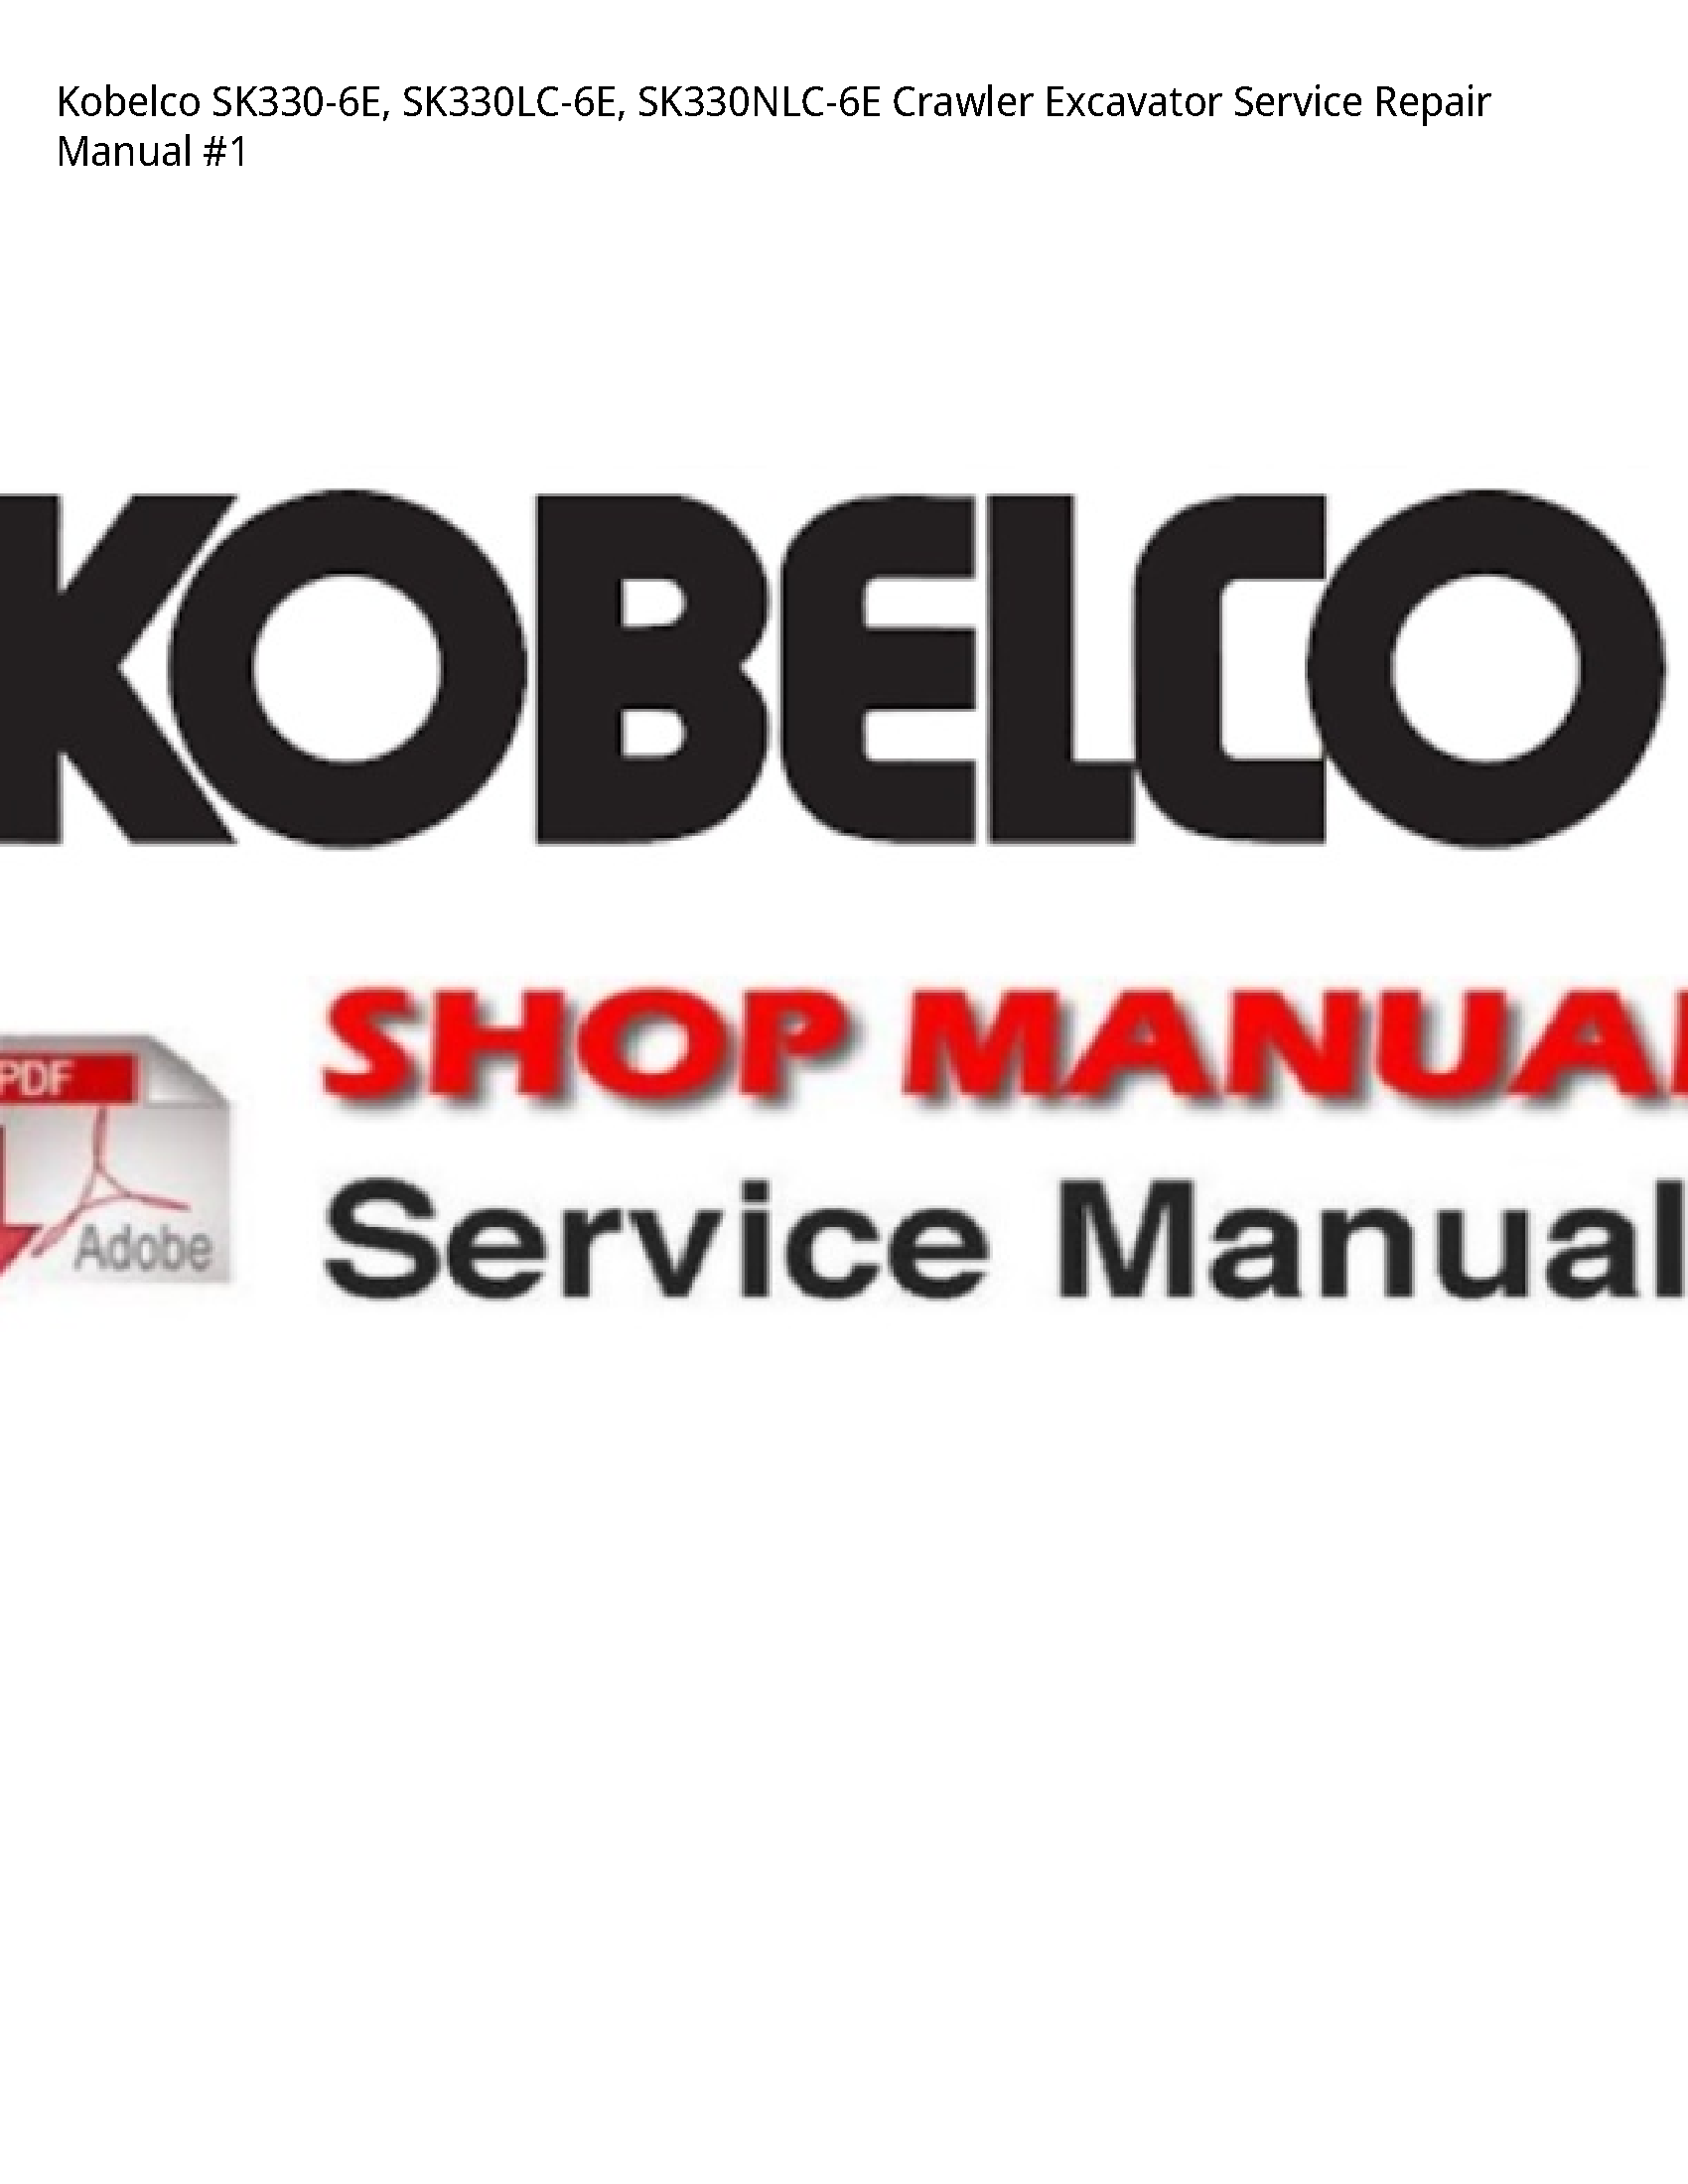 Kobelco SK330-6E Crawler Excavator manual